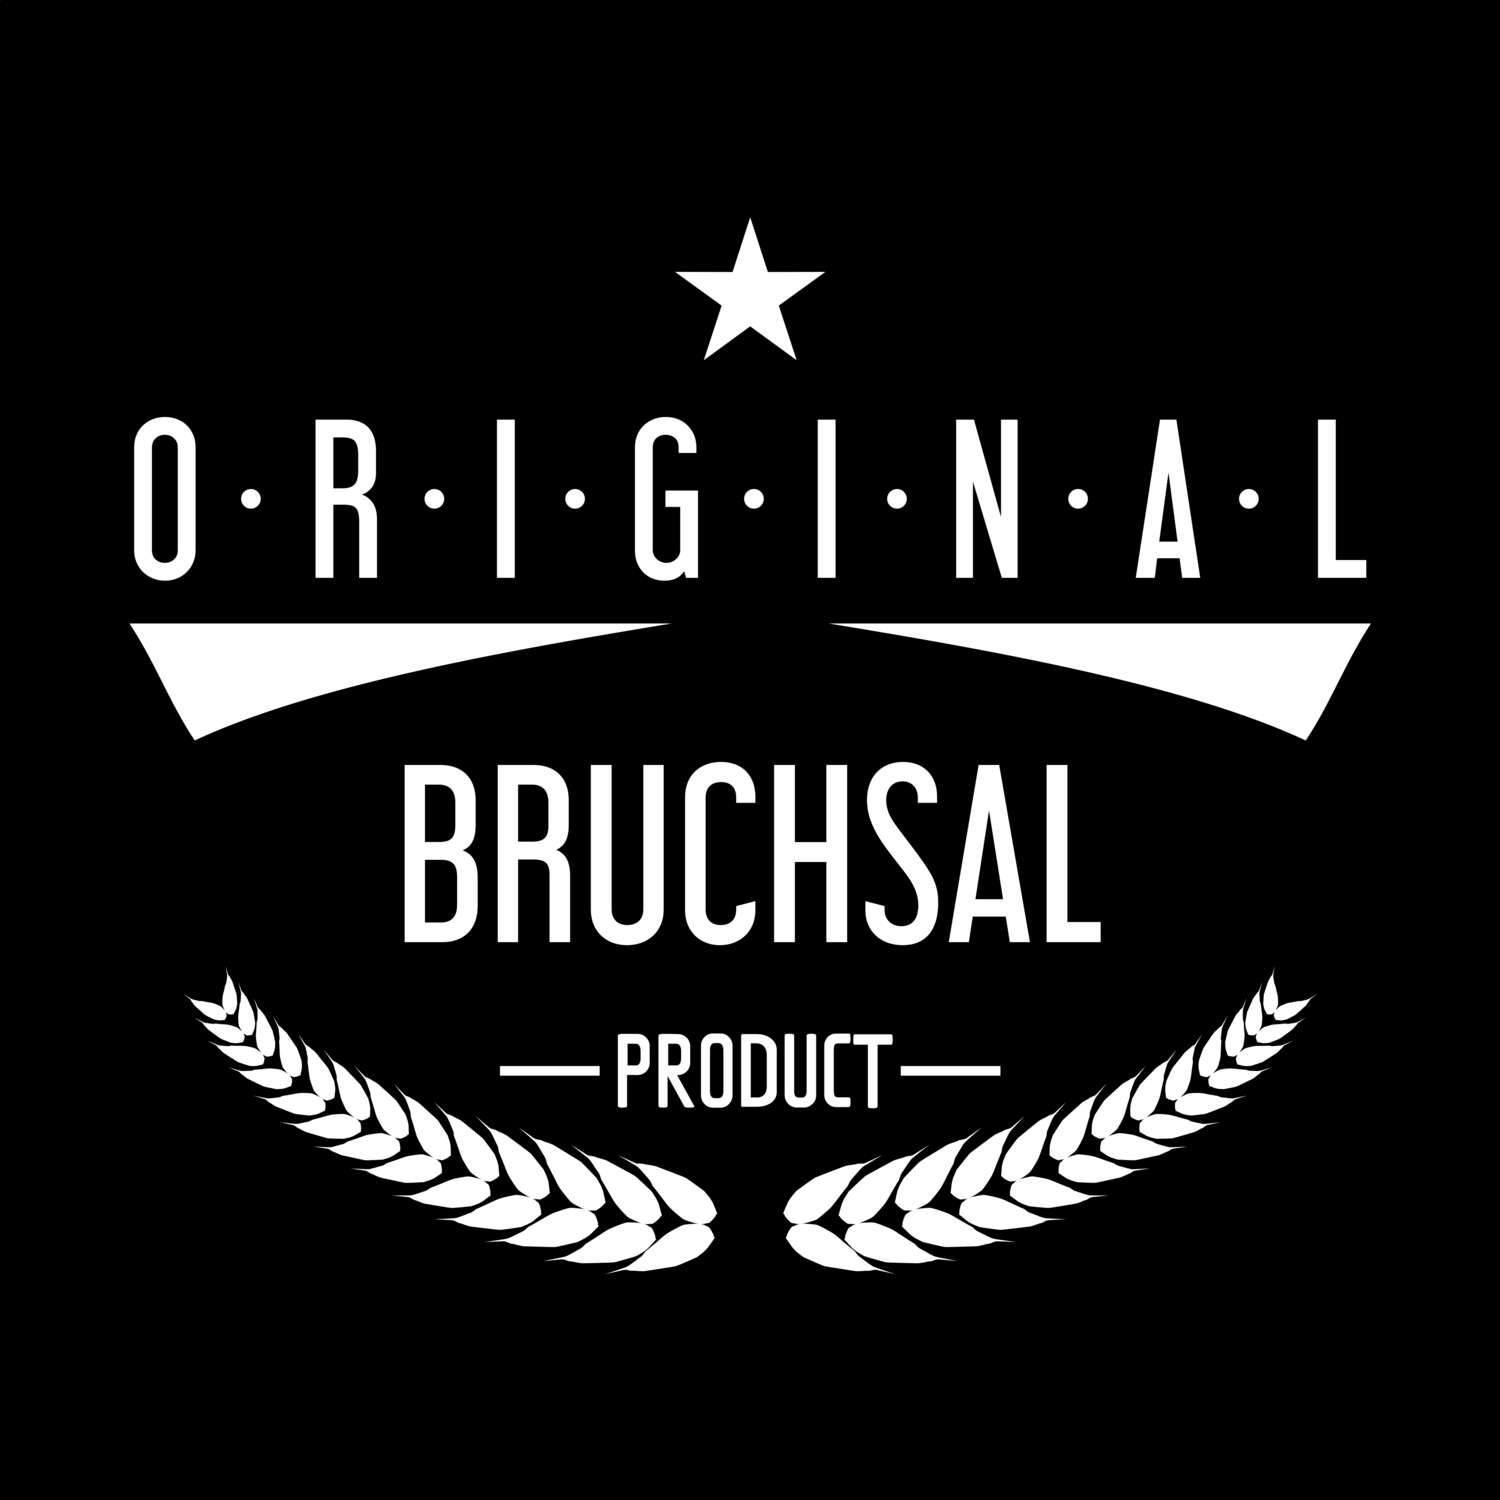 Bruchsal T-Shirt »Original Product«